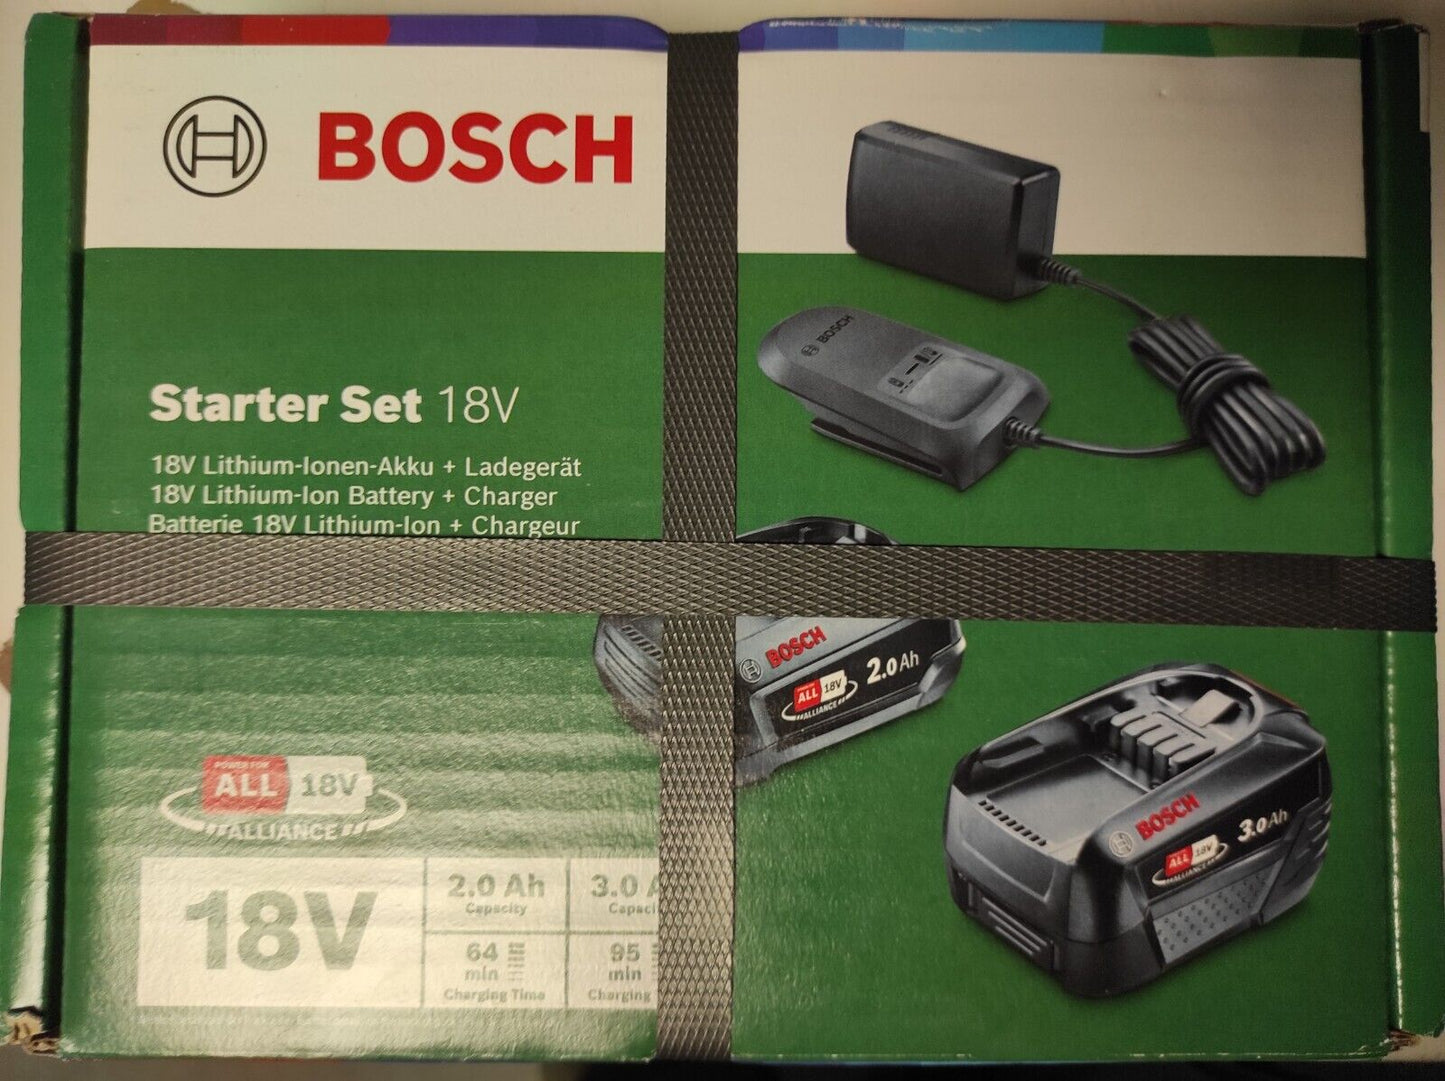 Bosch Alliance Akku Starter Set PBA 18V 2.0Ah + 3.0Ah + AL 18V-20